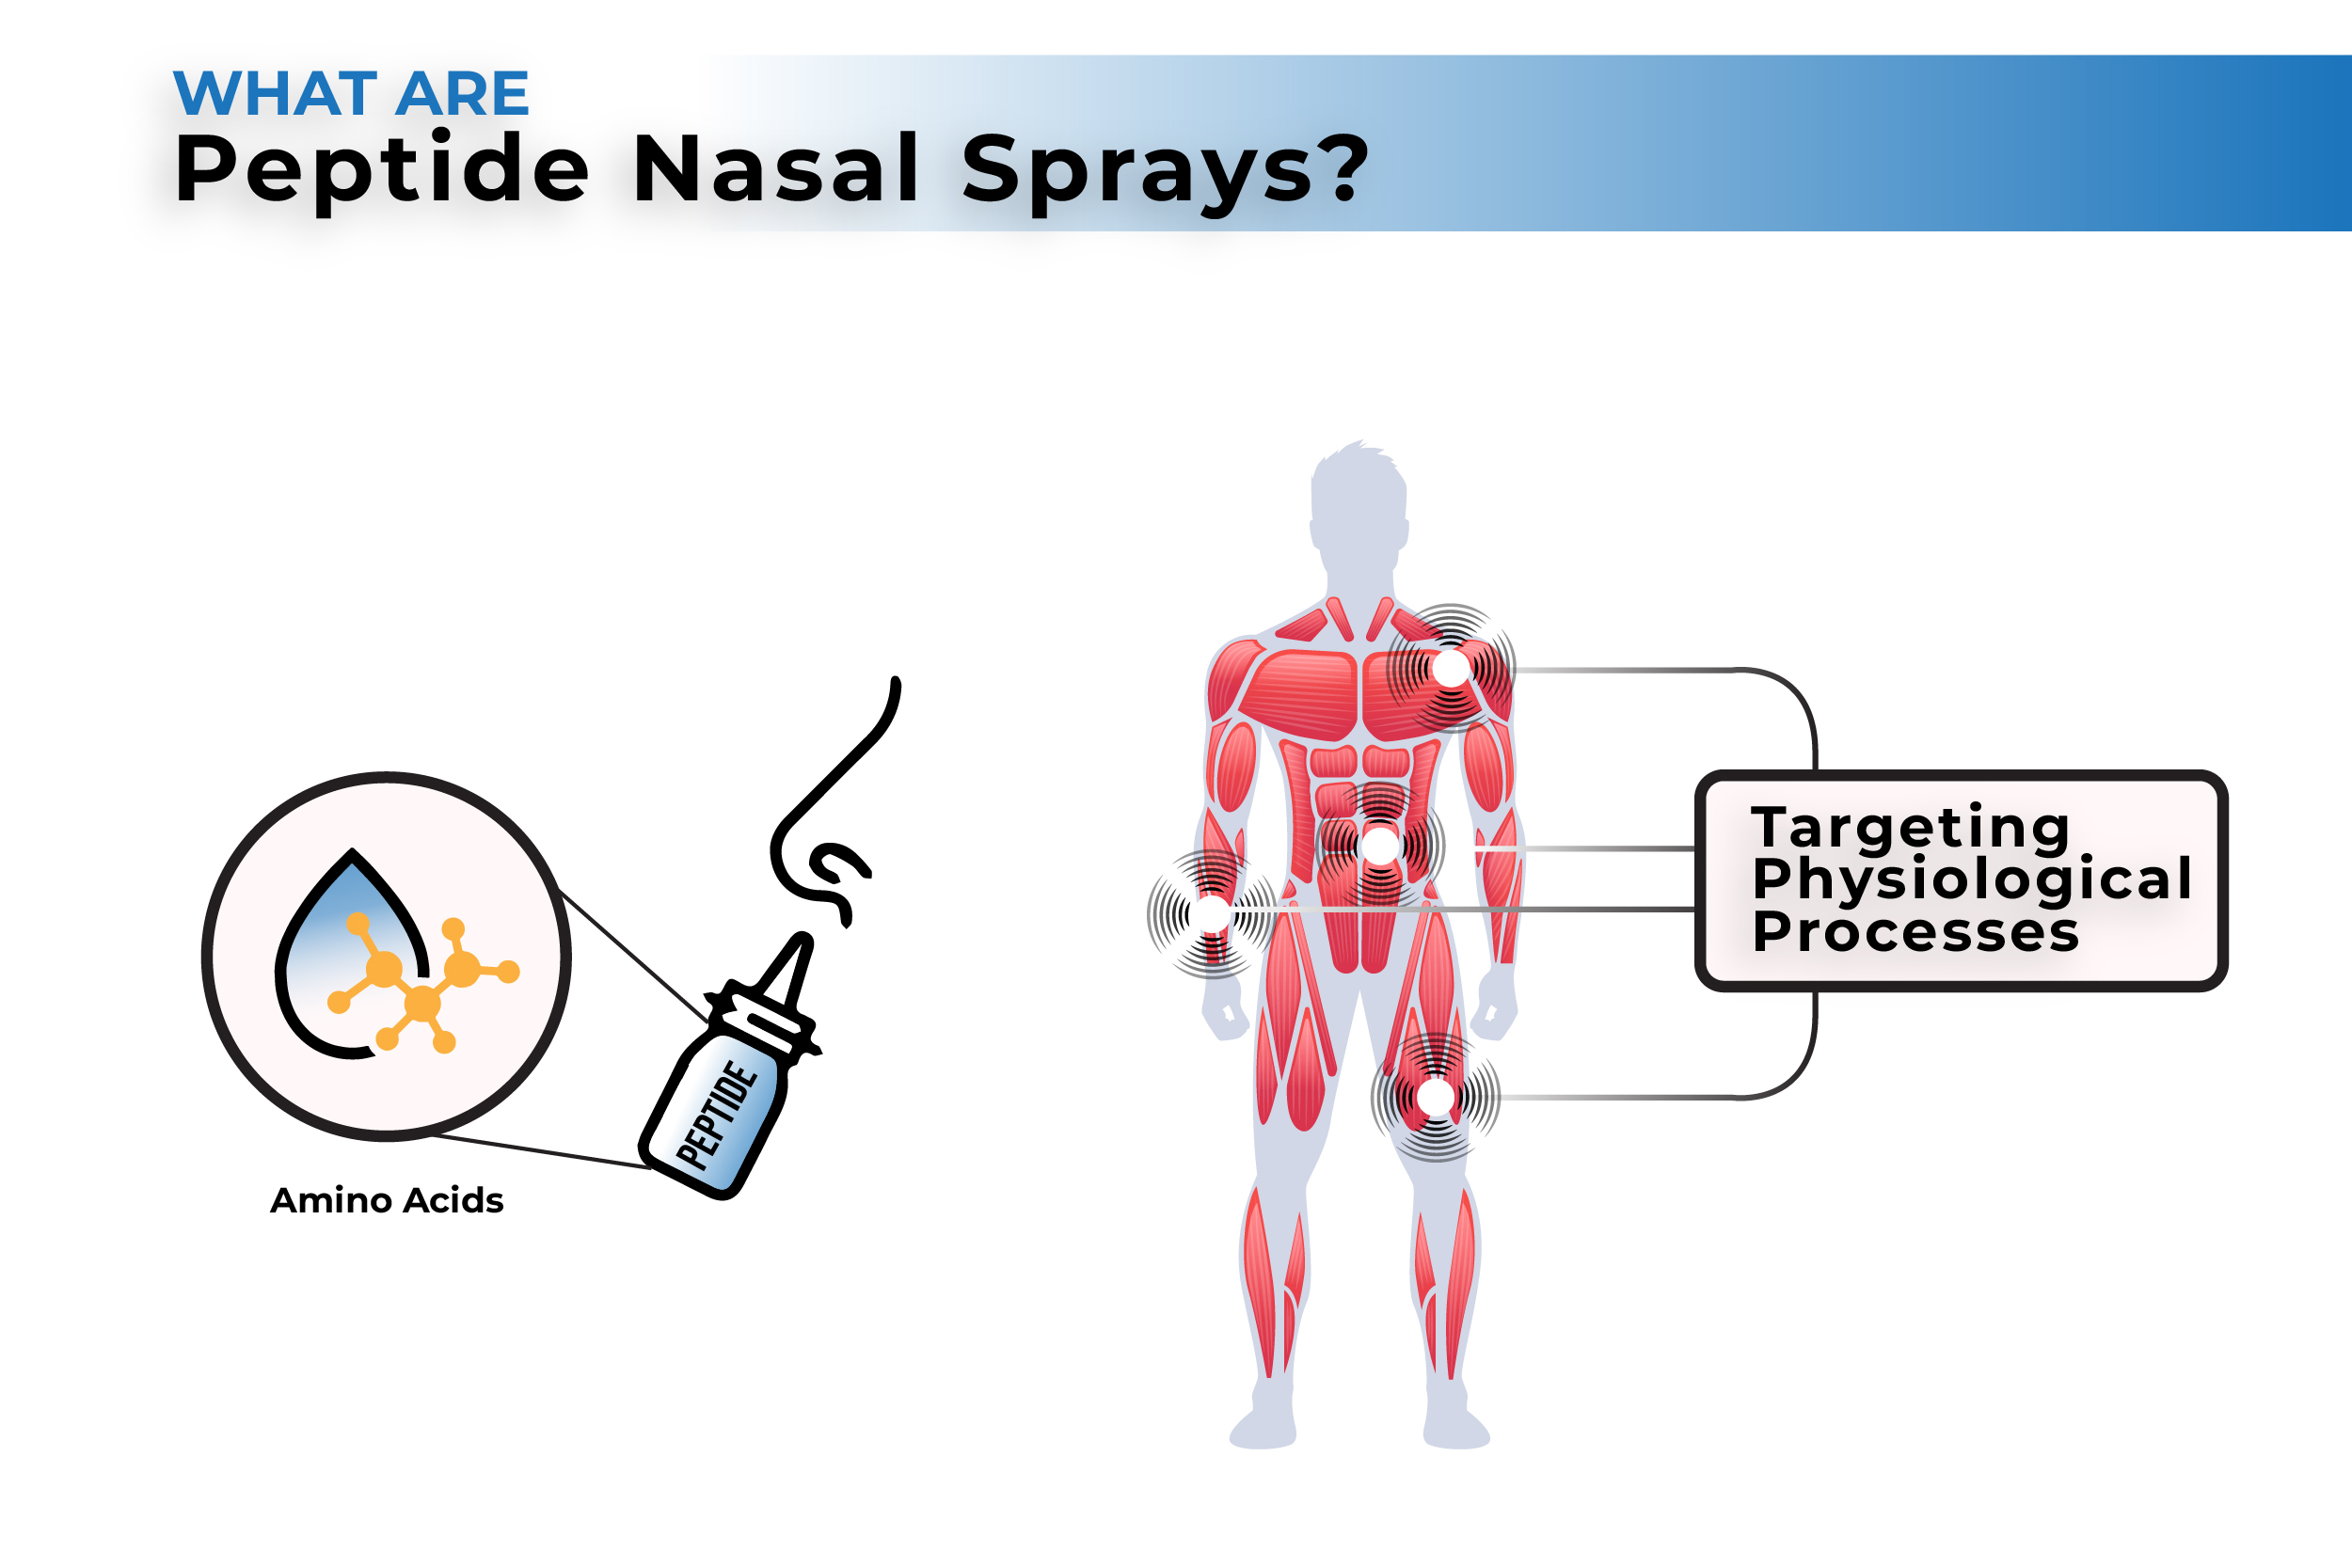 Peptide Nasal Sprays